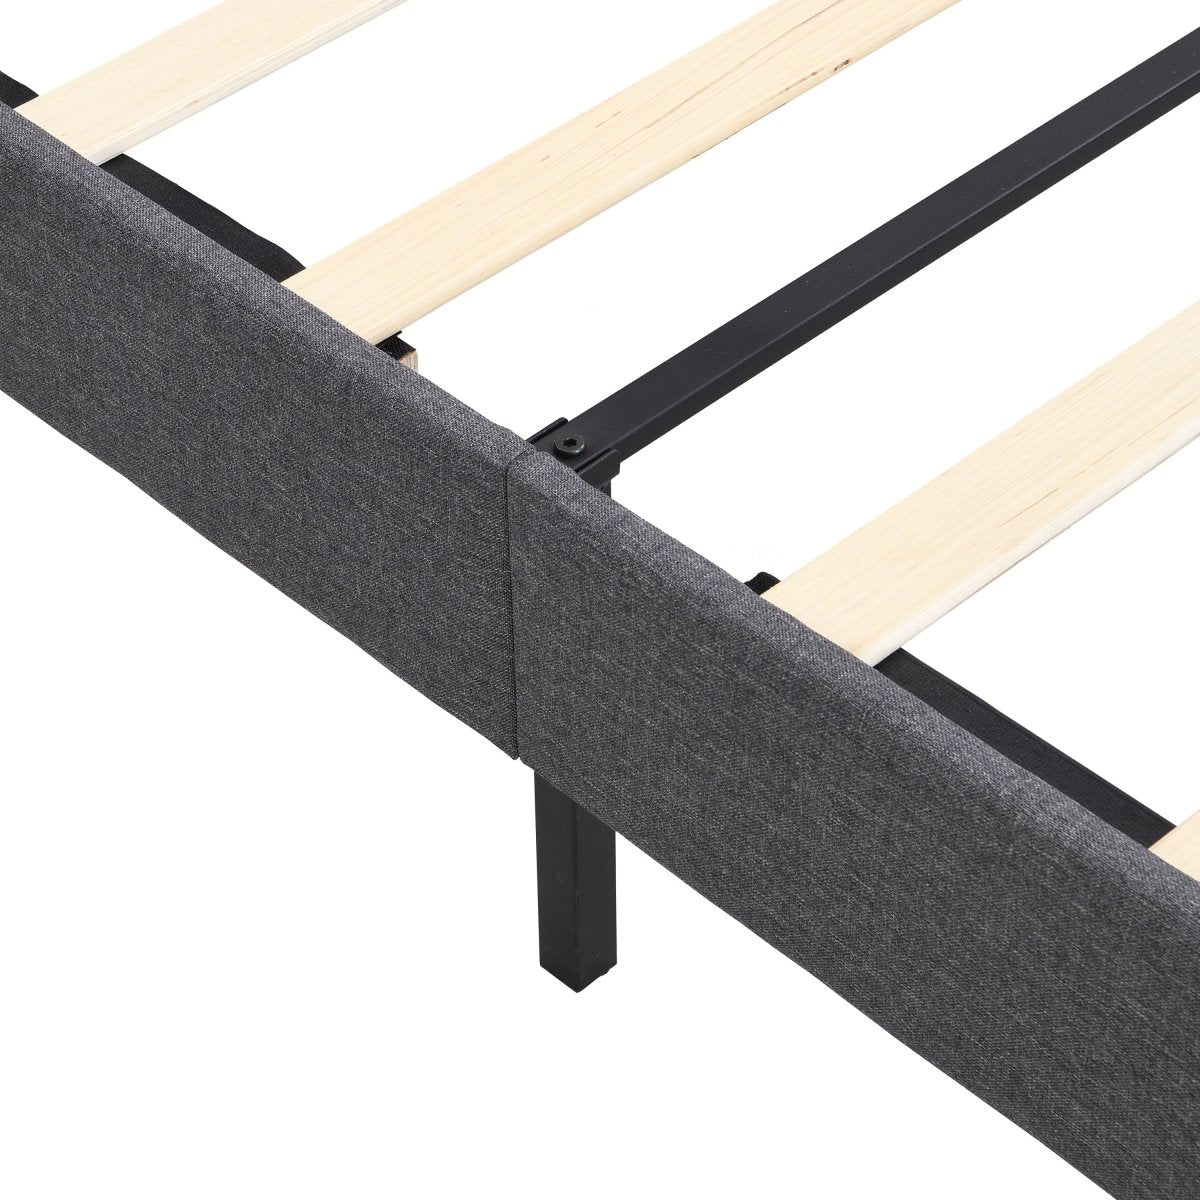 Queen Size Platform Bed Frame - Gray - Alpine Outlets